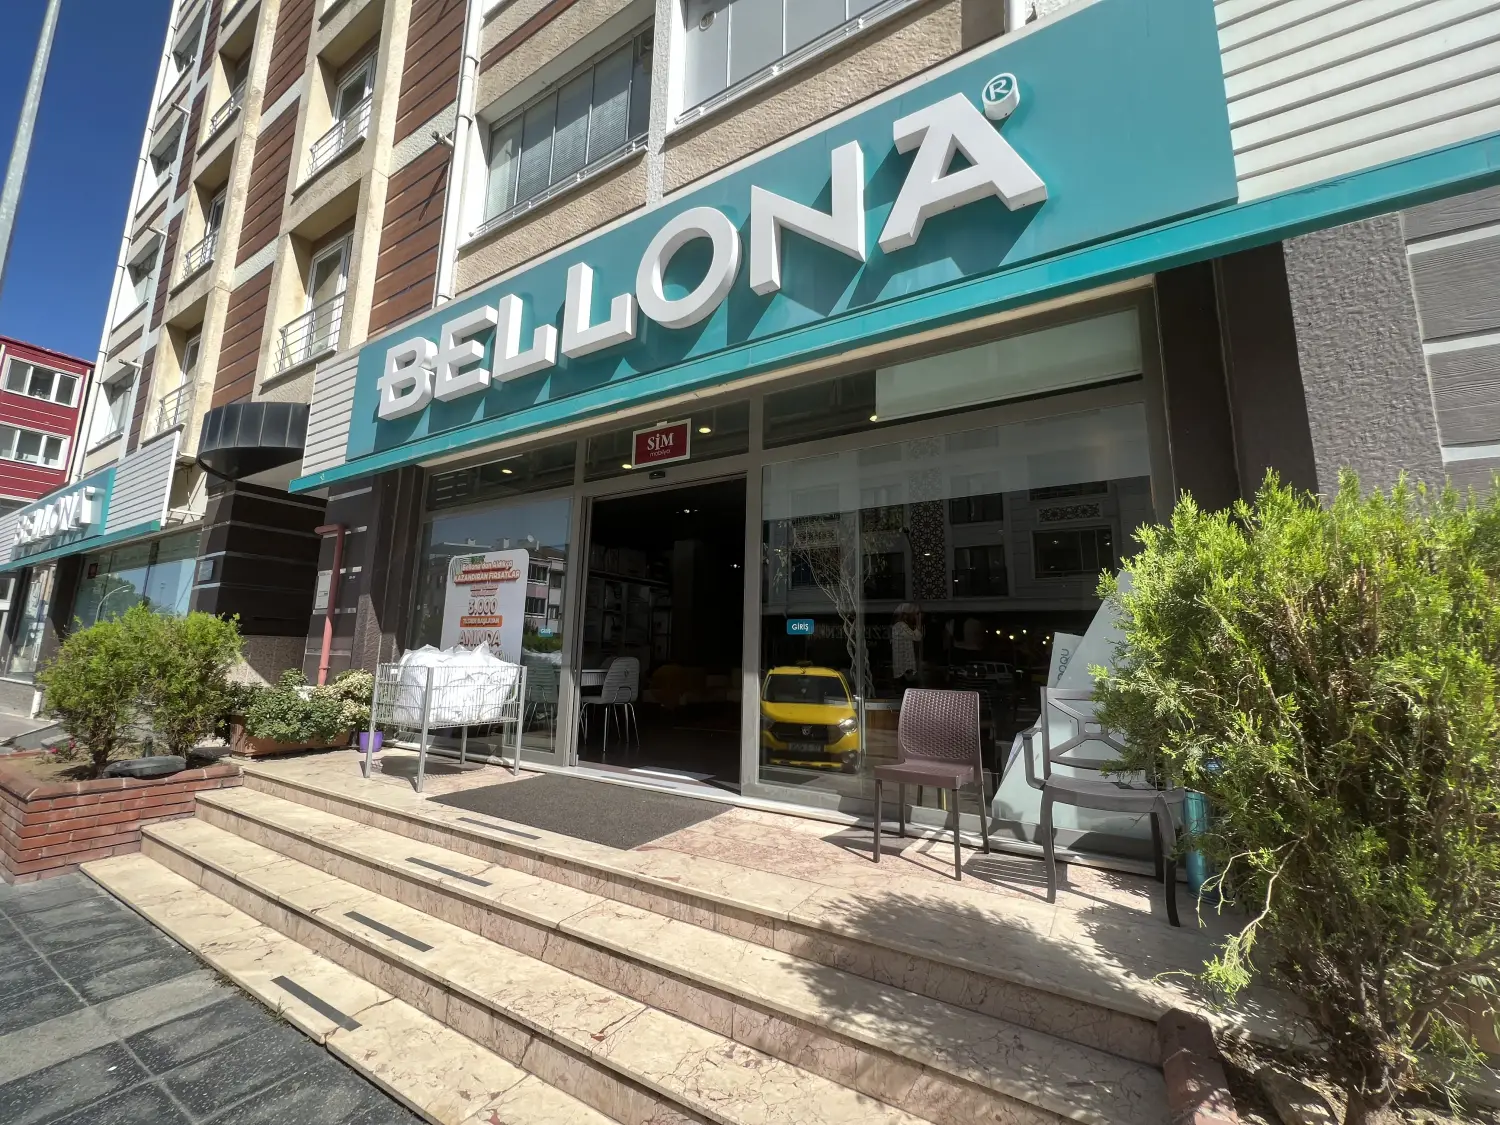 Bellona / Biga